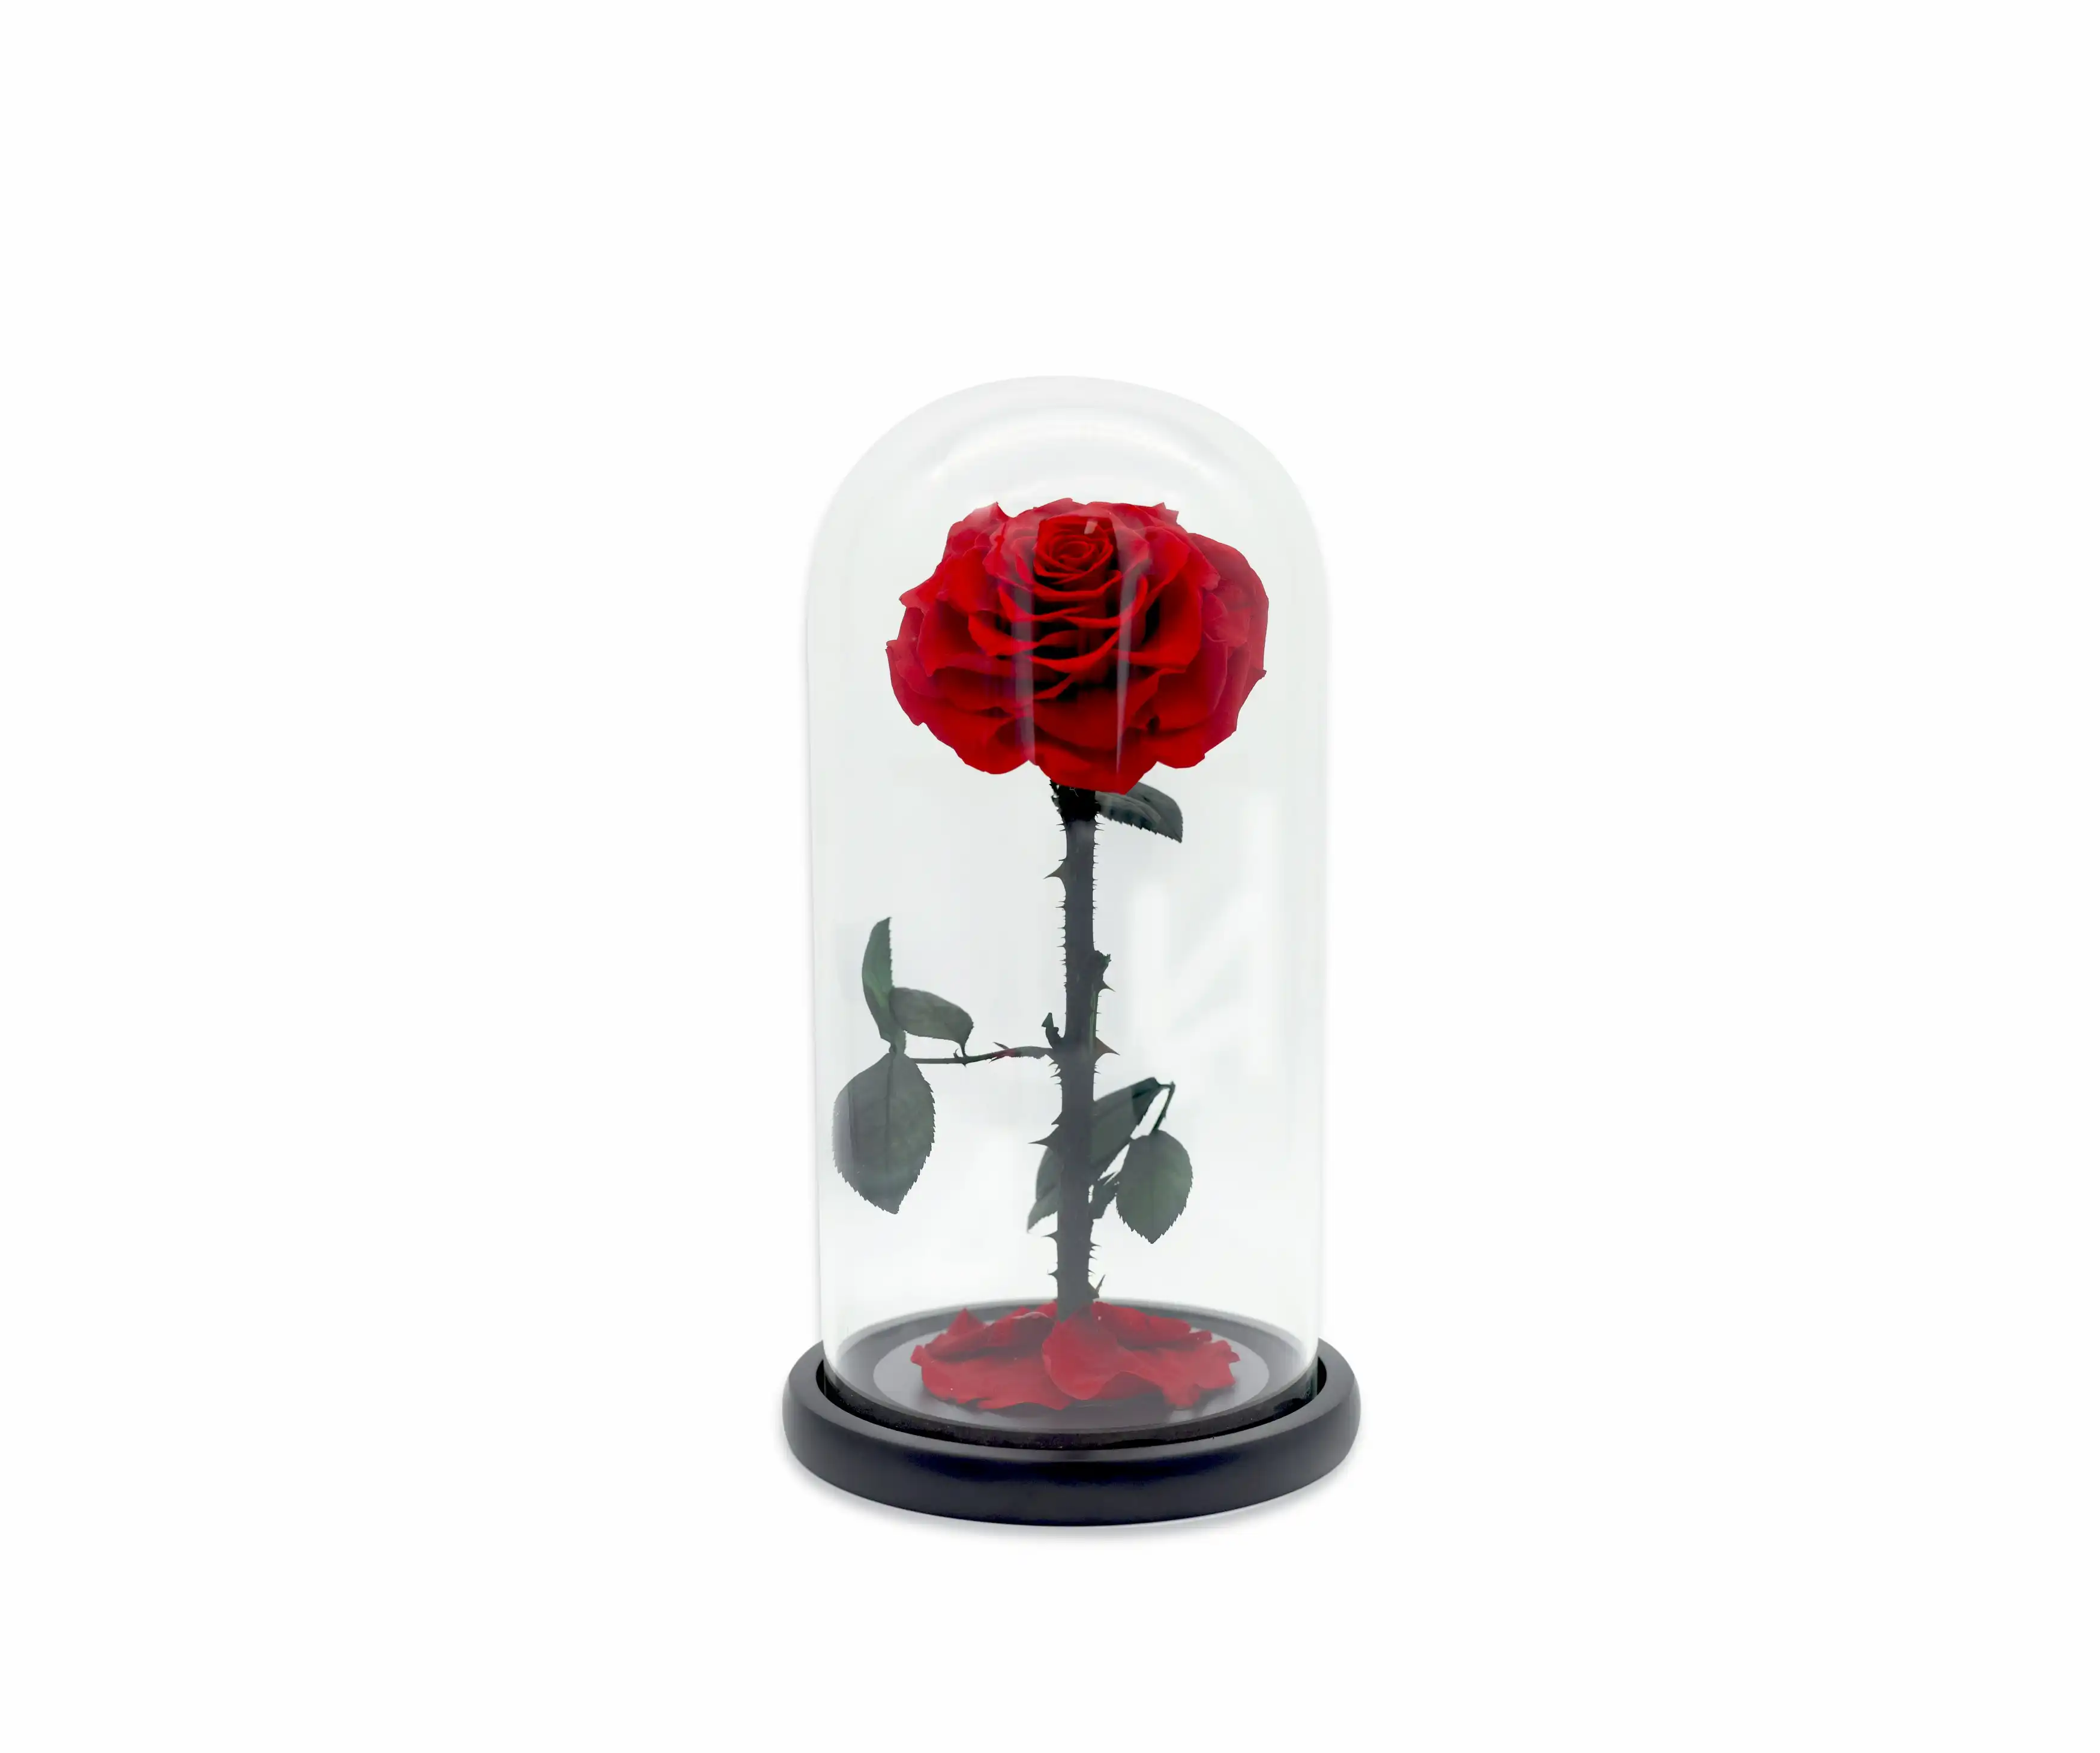 Vistara Timeless Rose - Natural 30cm Red Preserved Rose